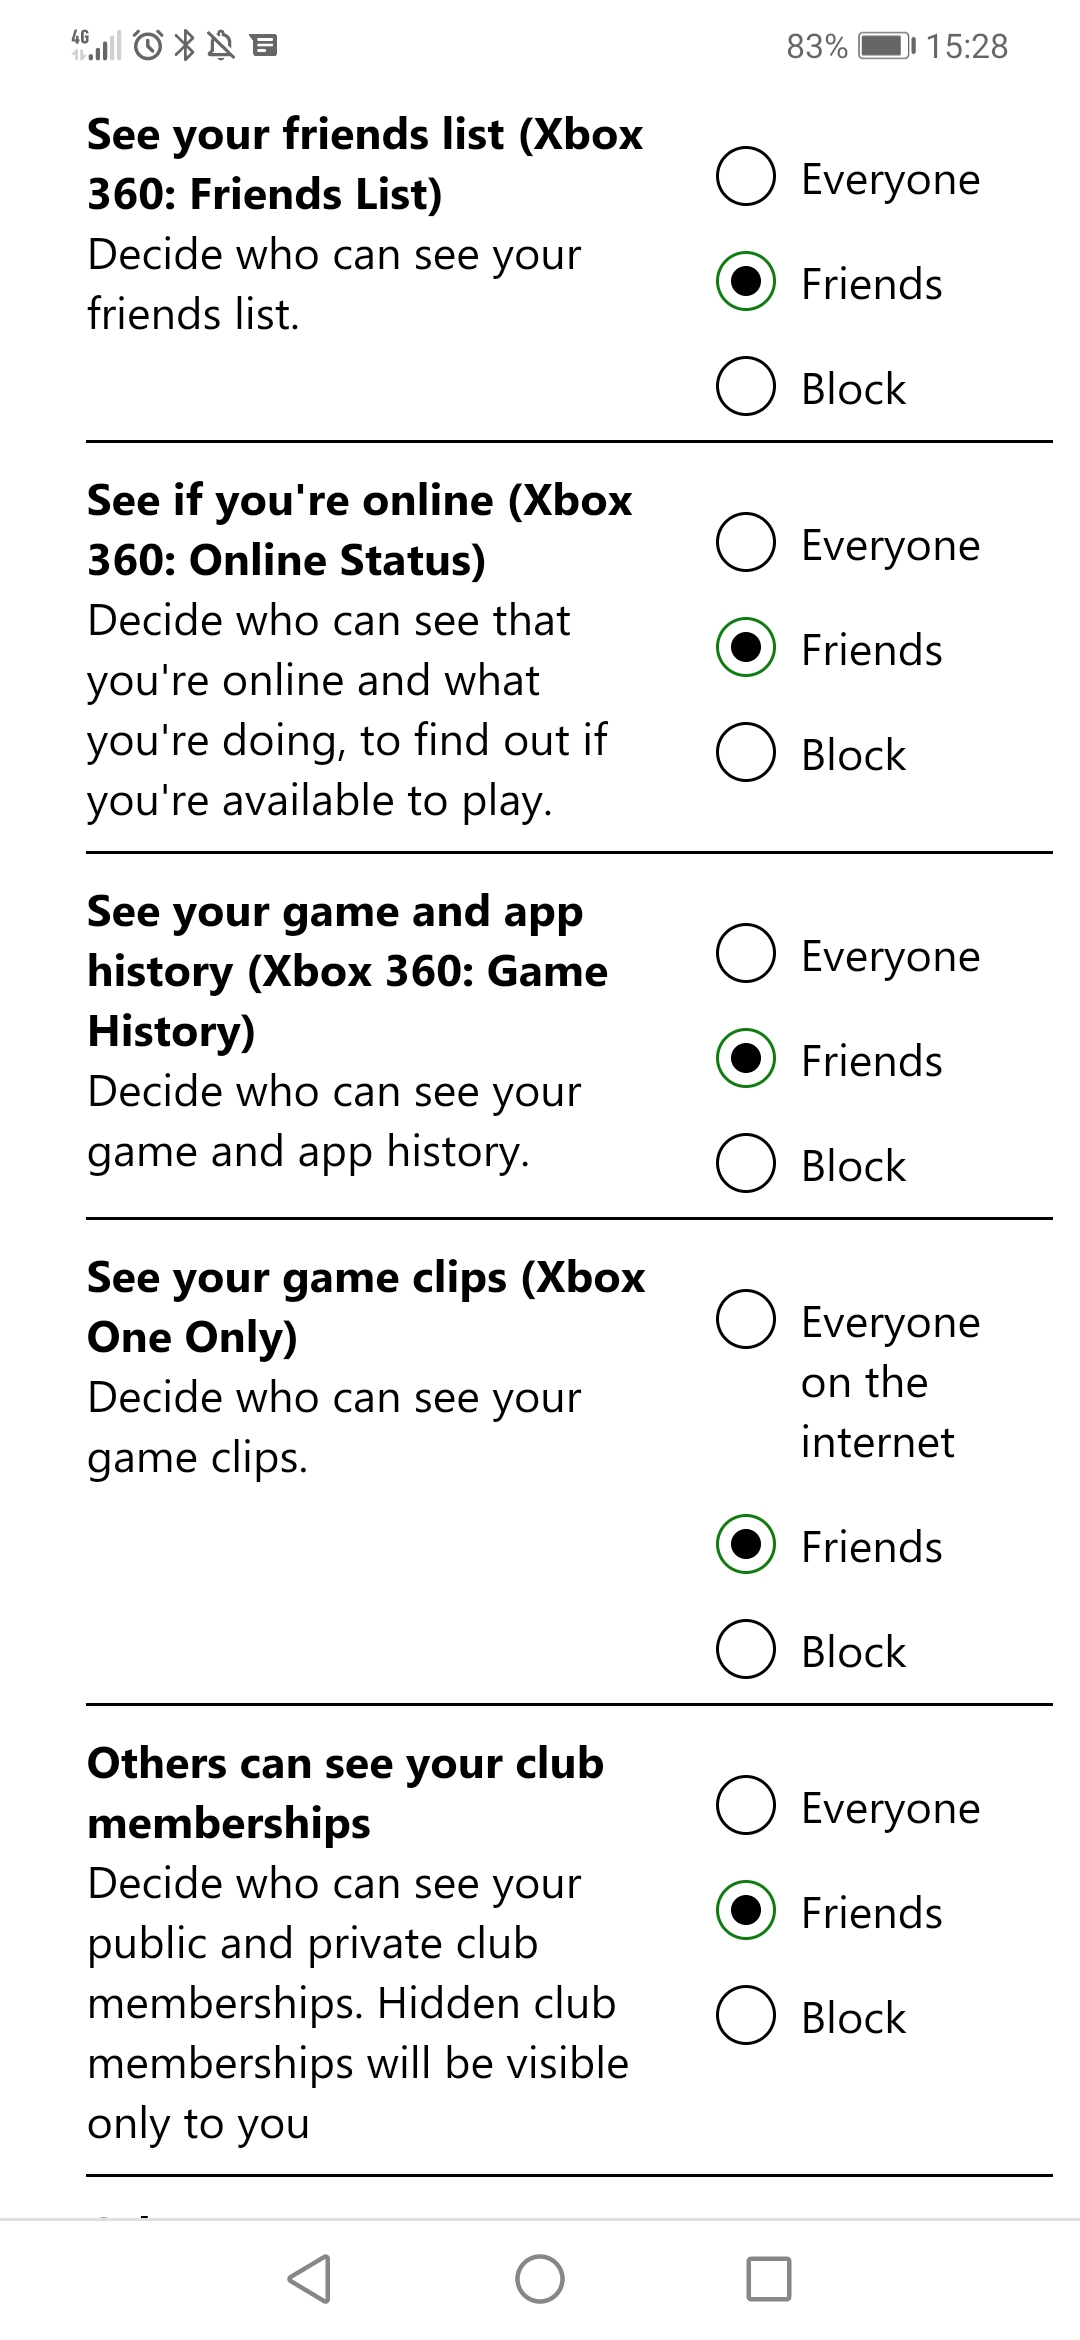 Roblox On Xbox One S Digital Microsoft Community - microsoft family settings roblox